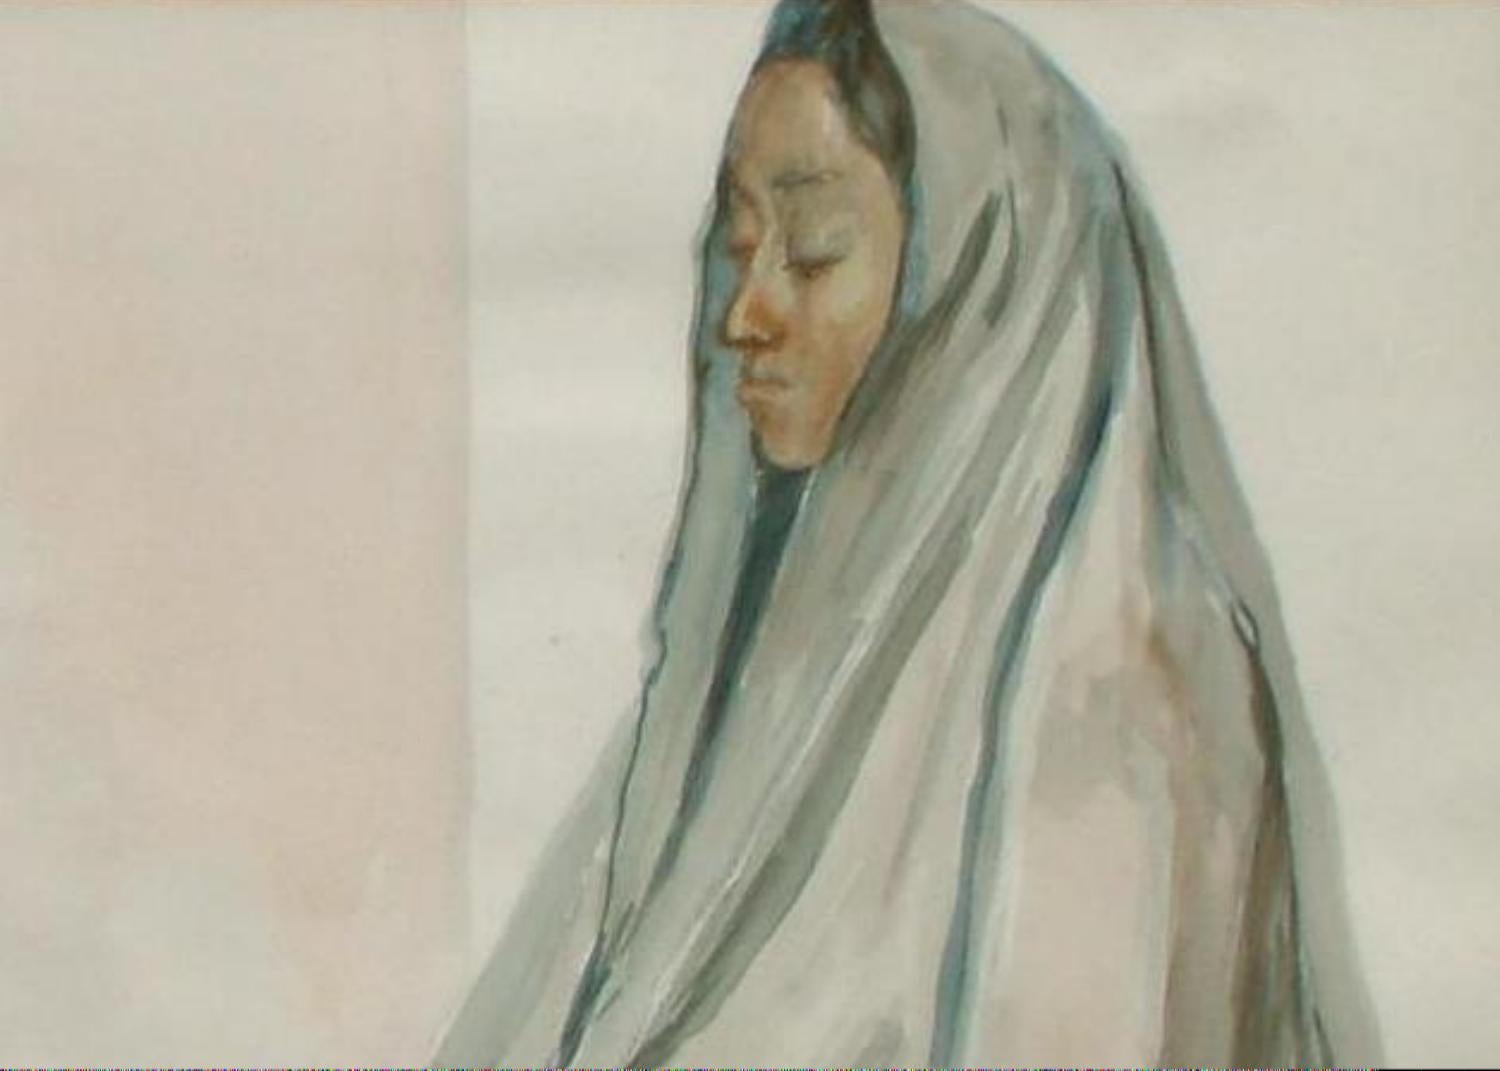 Painted Francisco Zuniga Mexican Modernist Watercolor, 1984, “Mujer Sentada con Rebozo